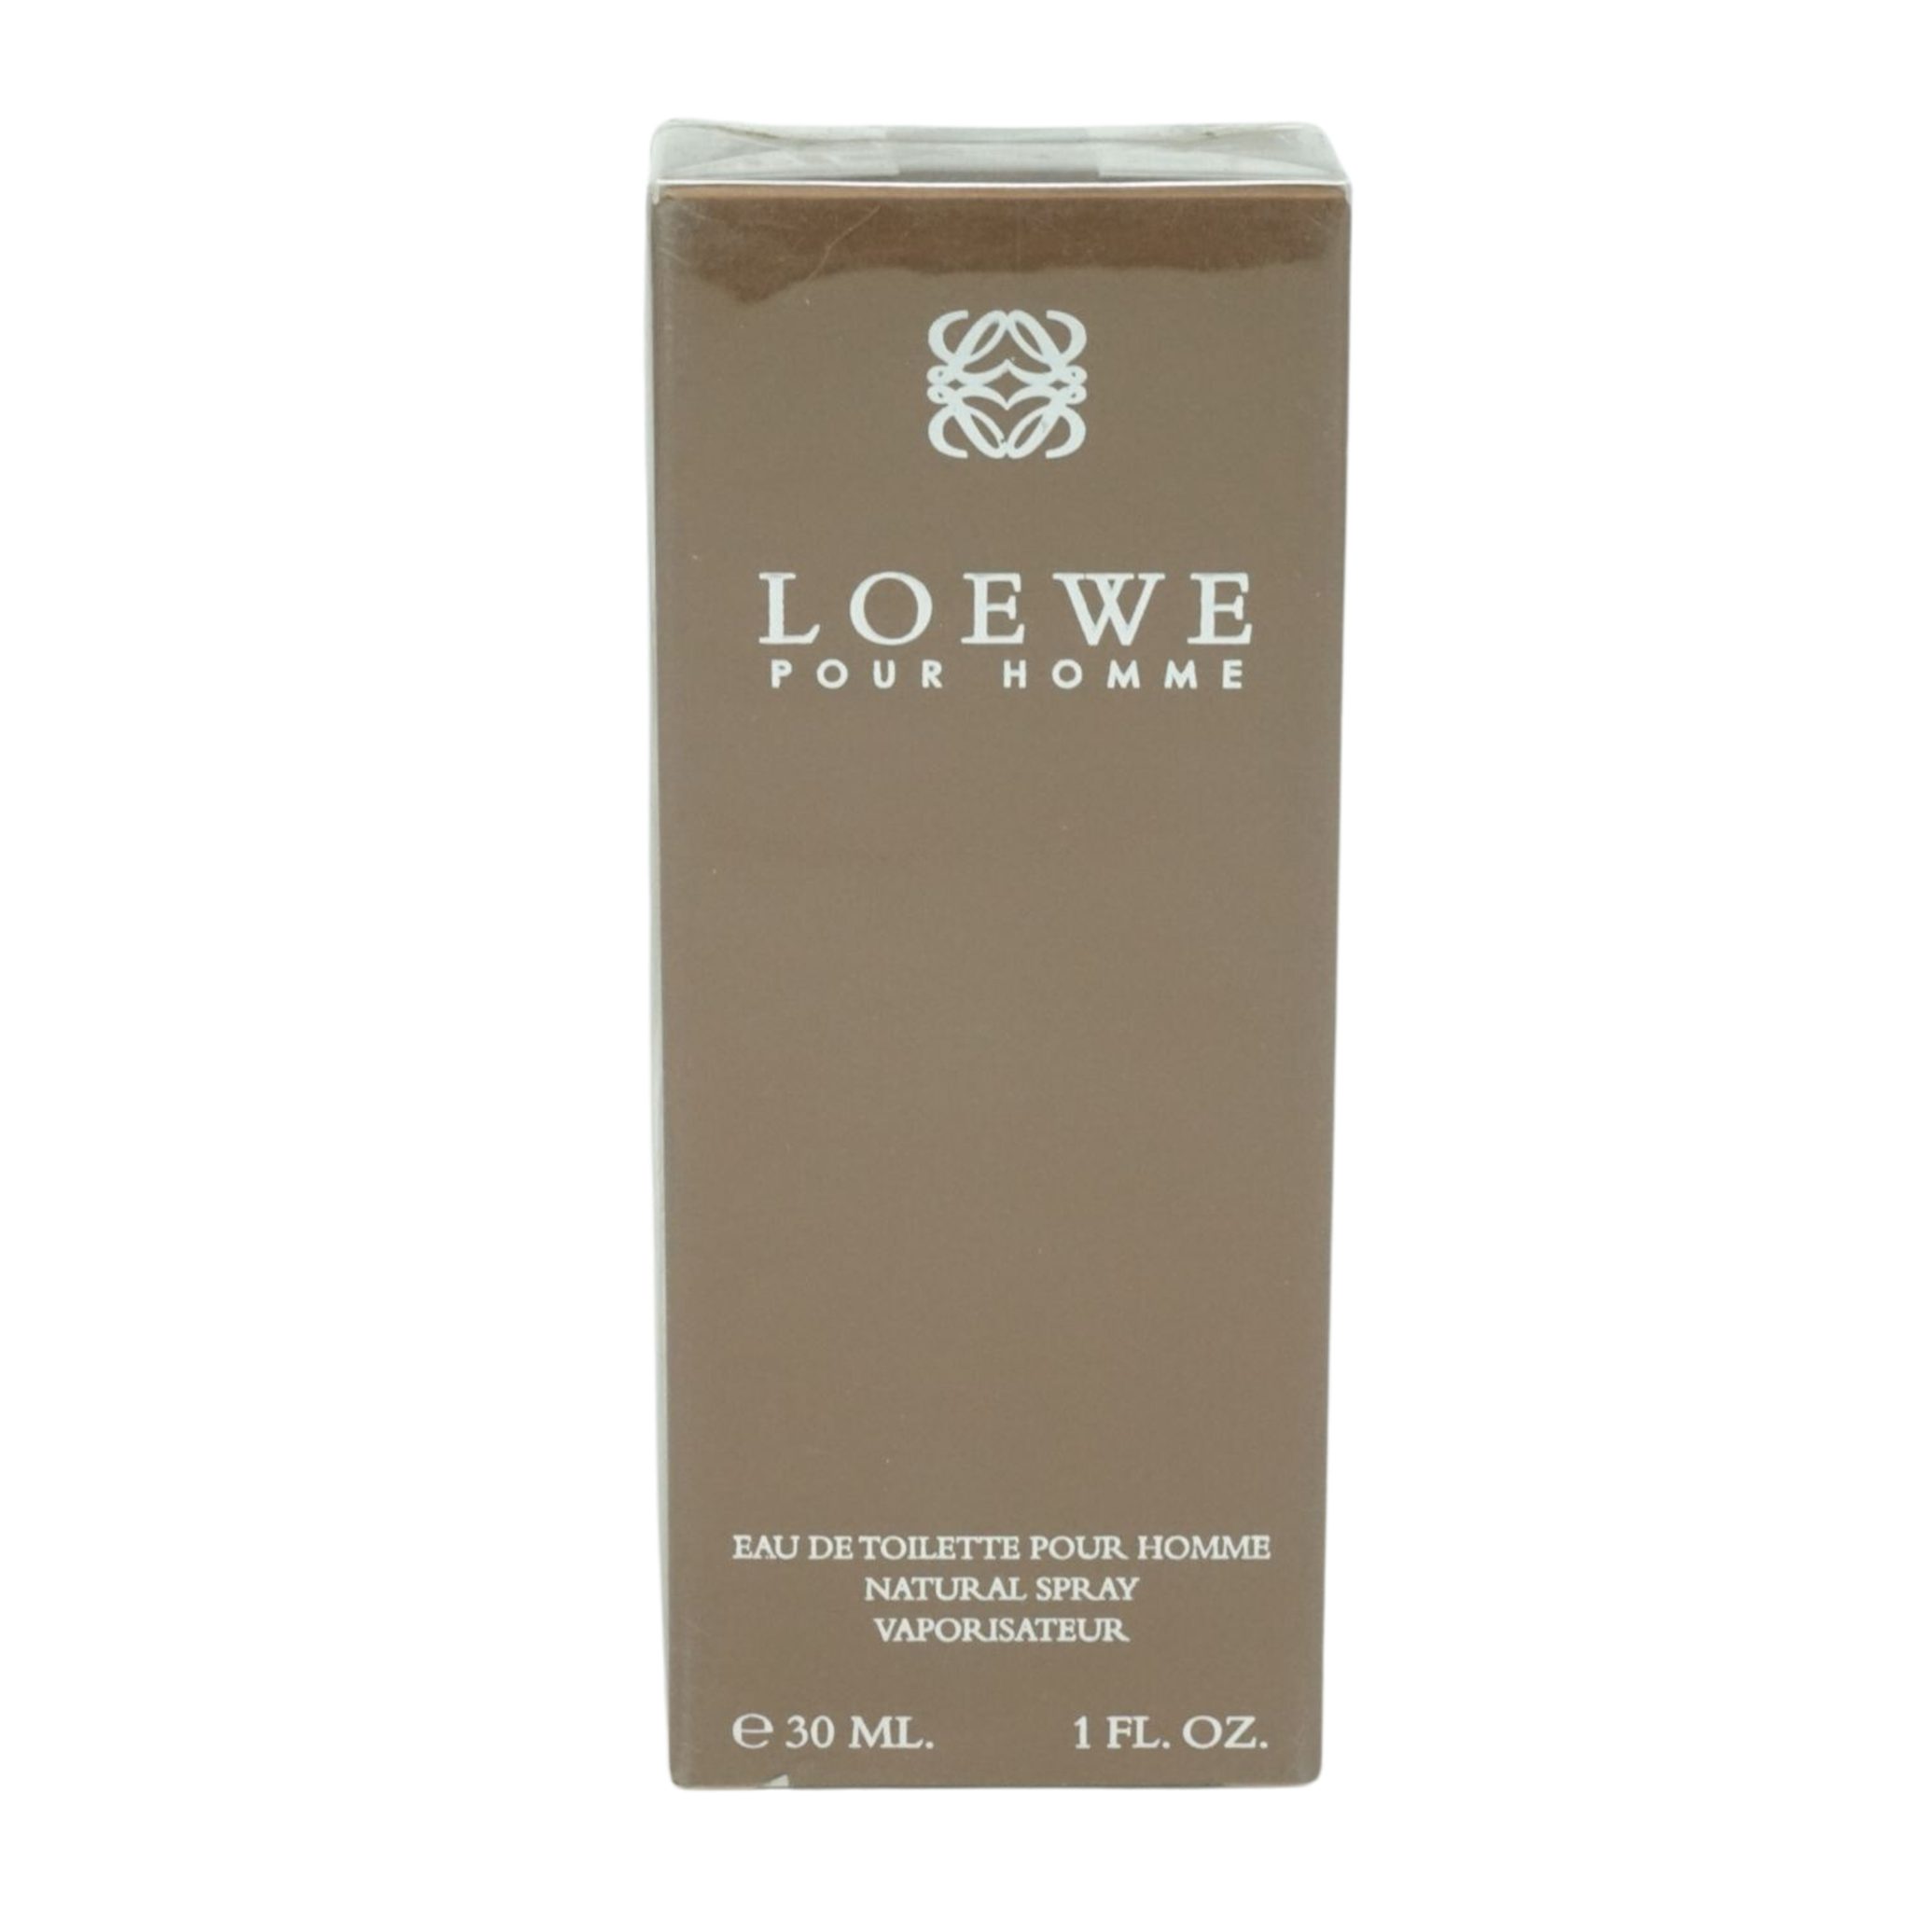 Loewe Eau de Toilette Loewe Pour HOmme Eau de Toilette Spray 30ml